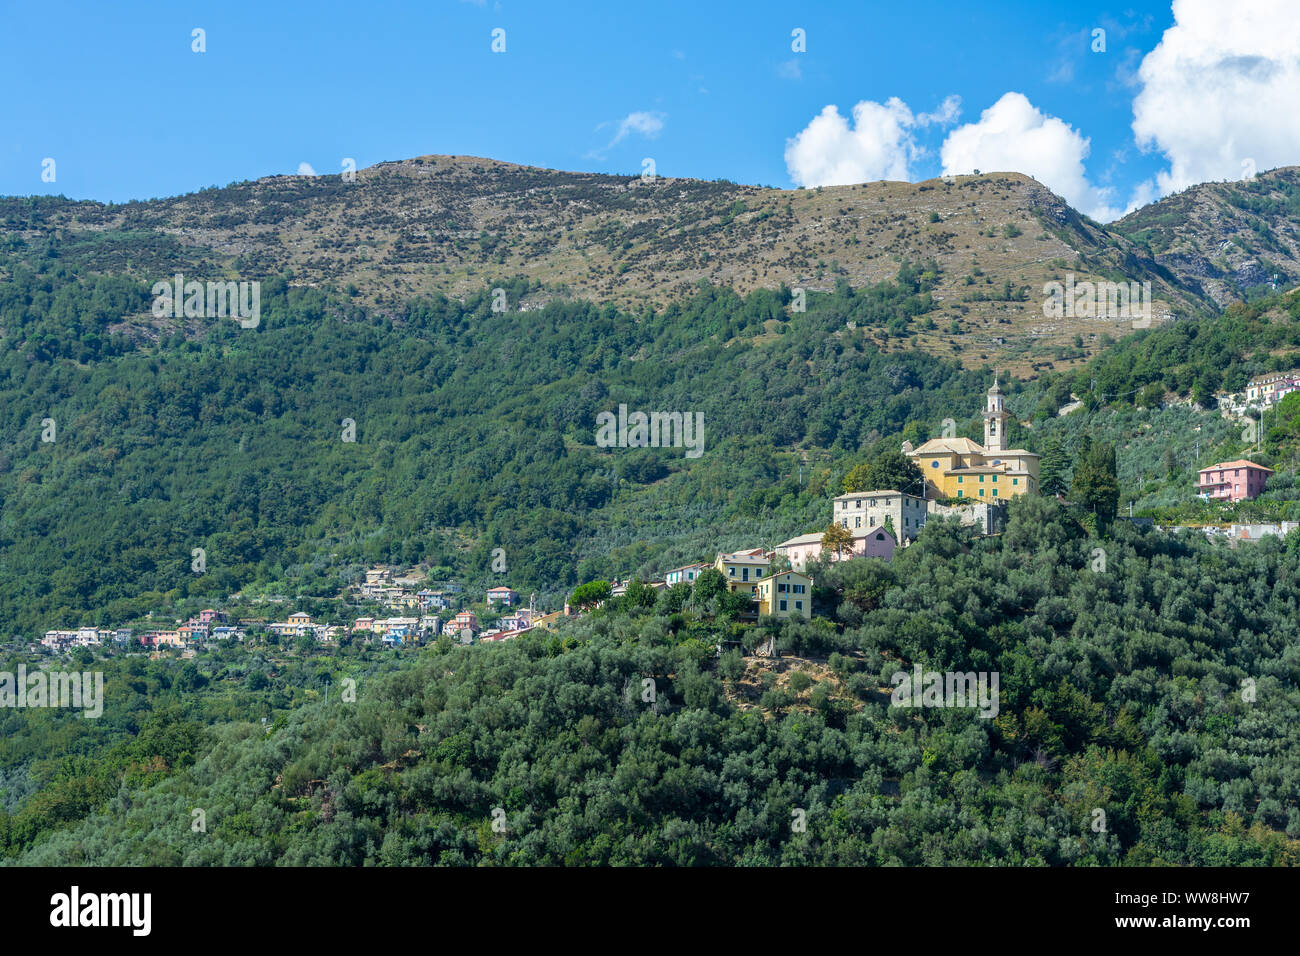 Das Dorf Canepa in der Apenninen inLiguria, Italien Stockfoto